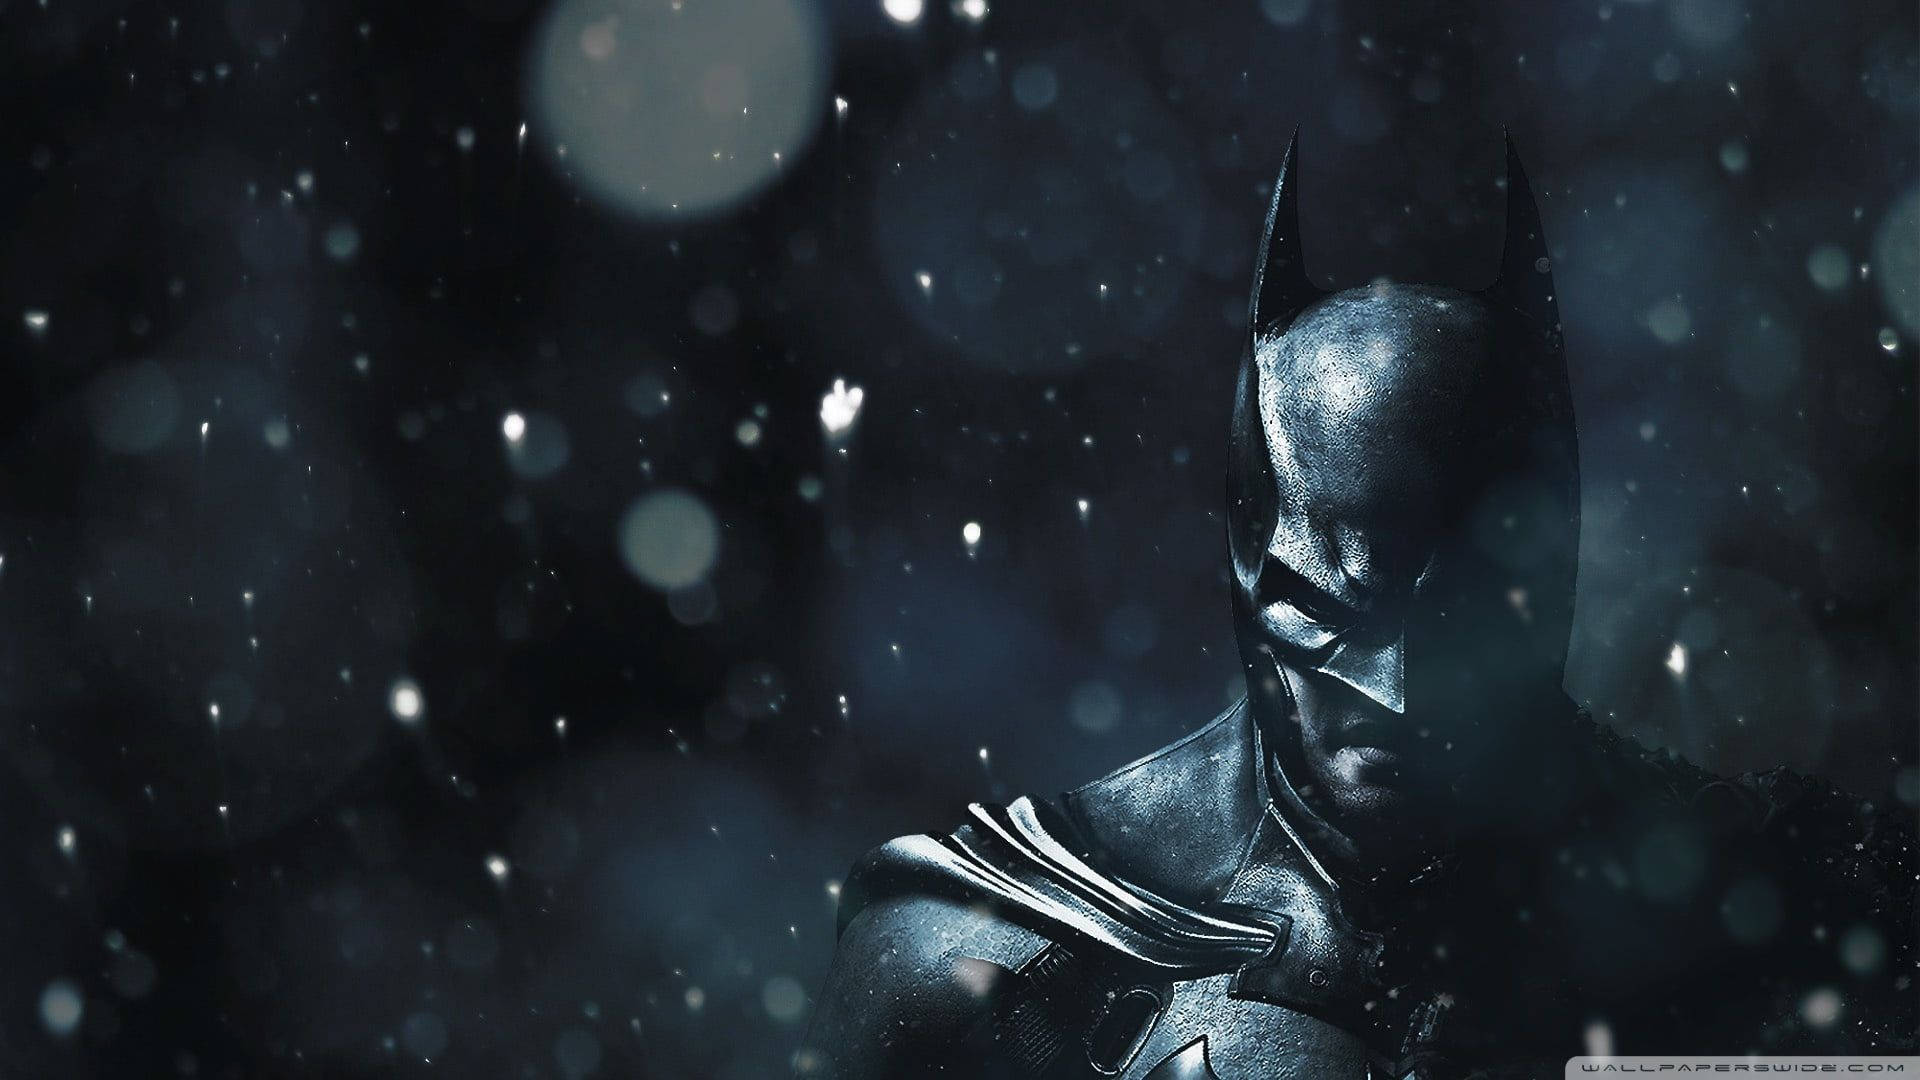 The Dark Knight, Batman Rises Wallpaper